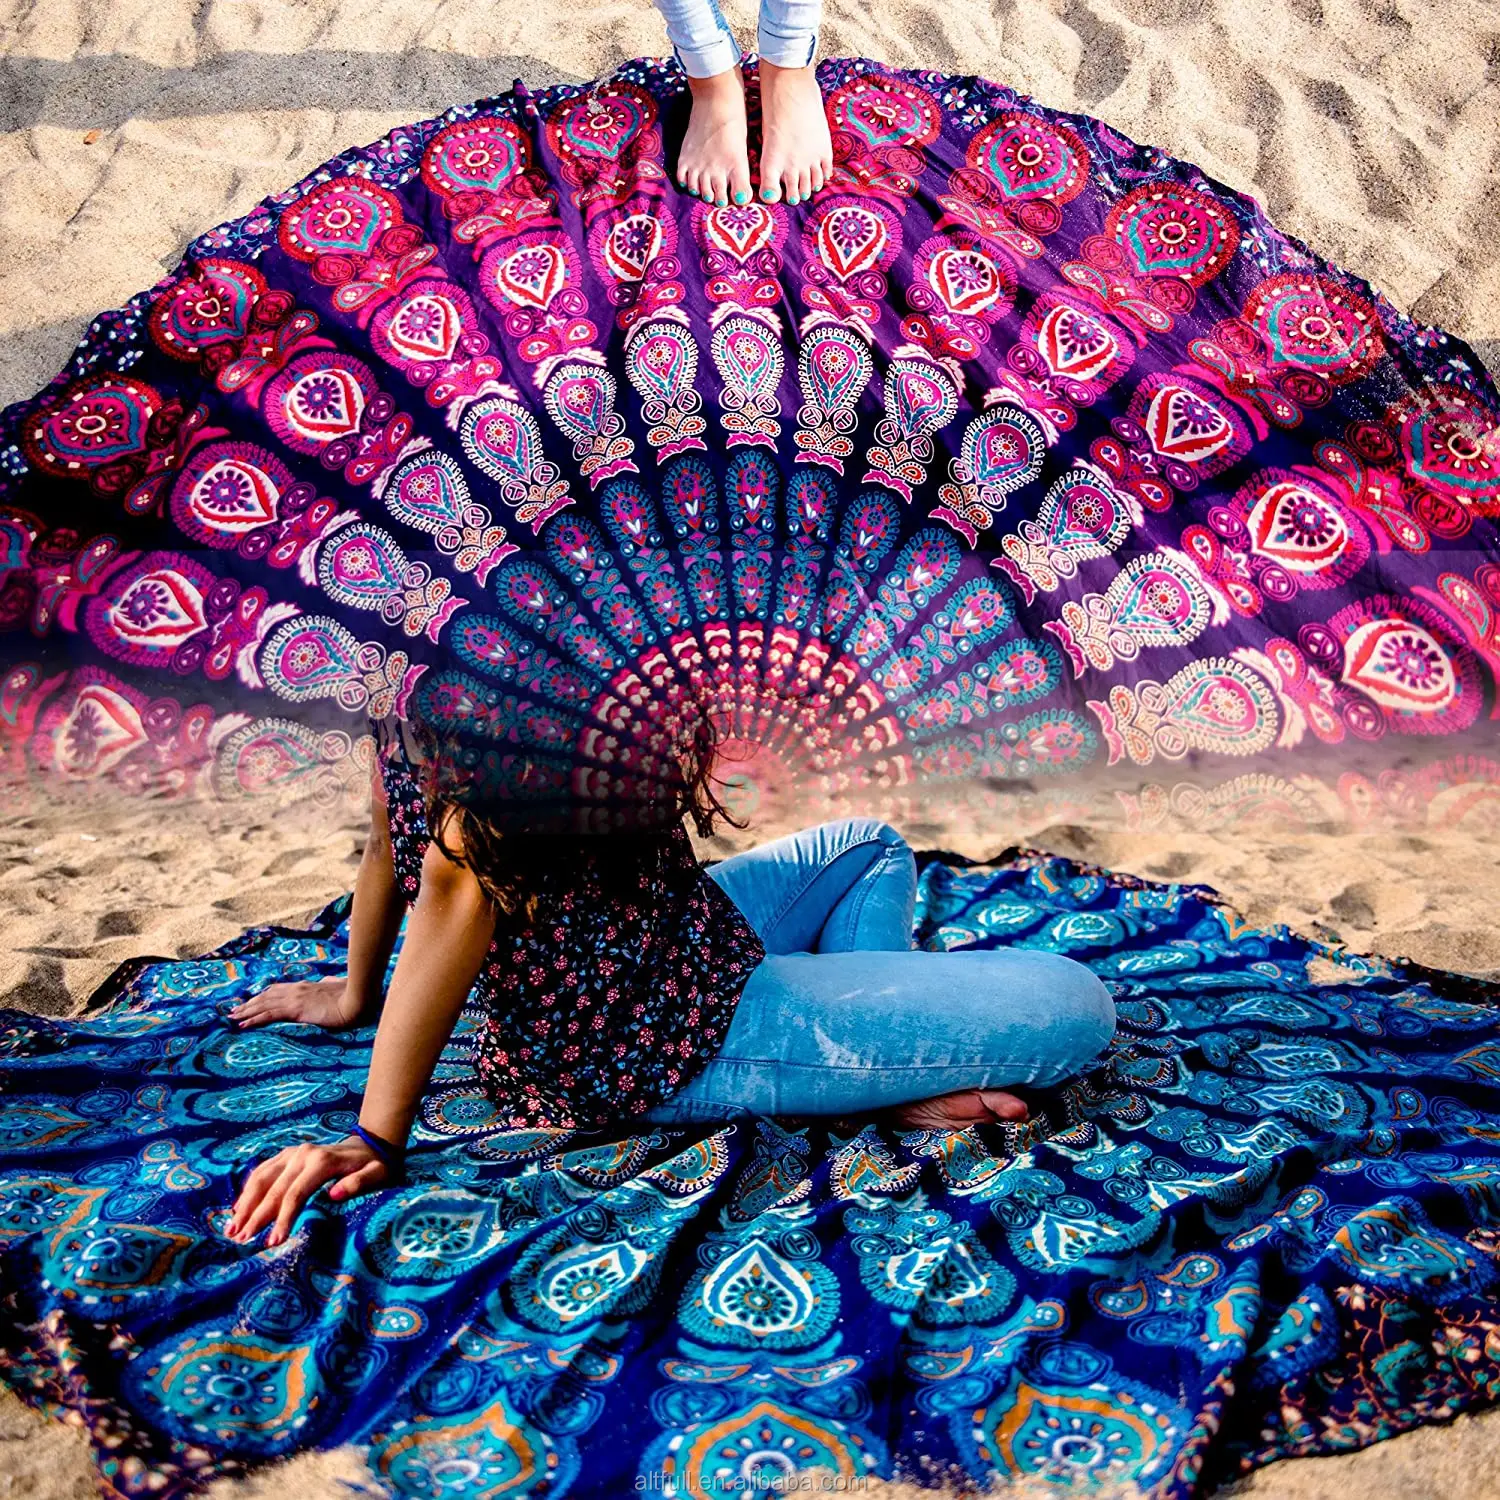 Big Roundie Round Yoga Mat Grey Mandala Flower 72" Inches Fabric Indian Cotton